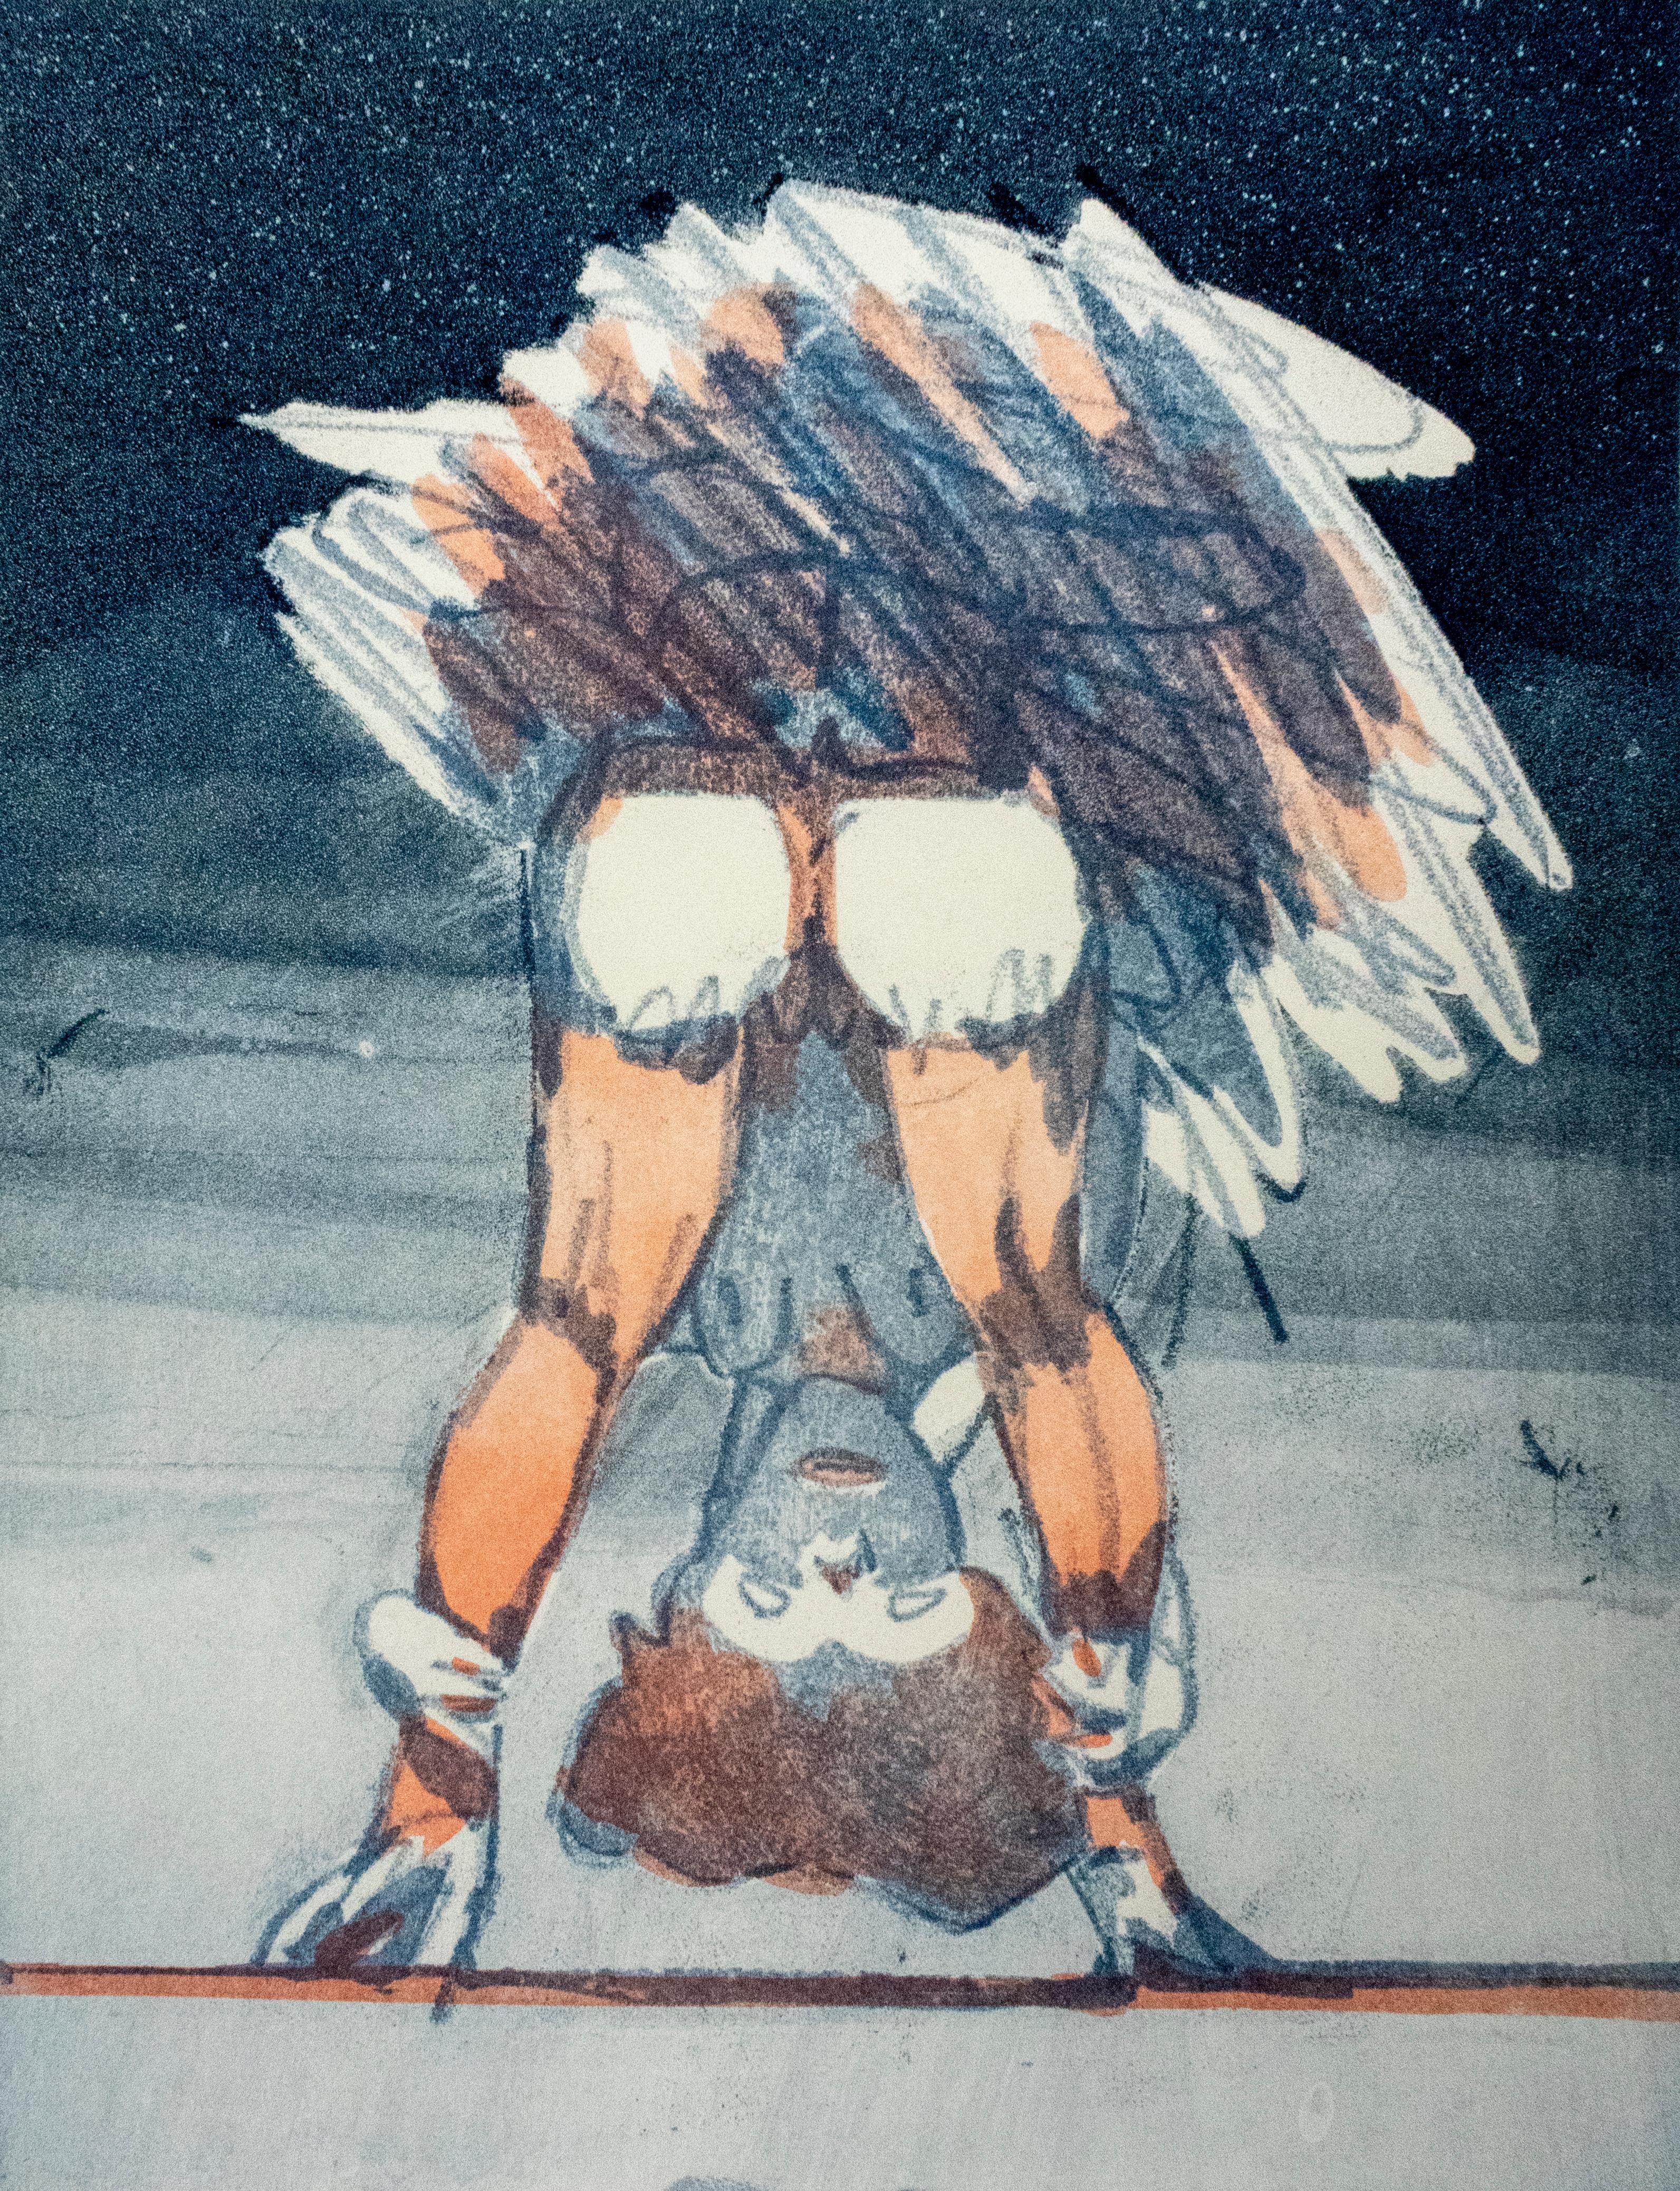 Figure Looking through Legs Claes Oldenburg nude etching of woman in skirt